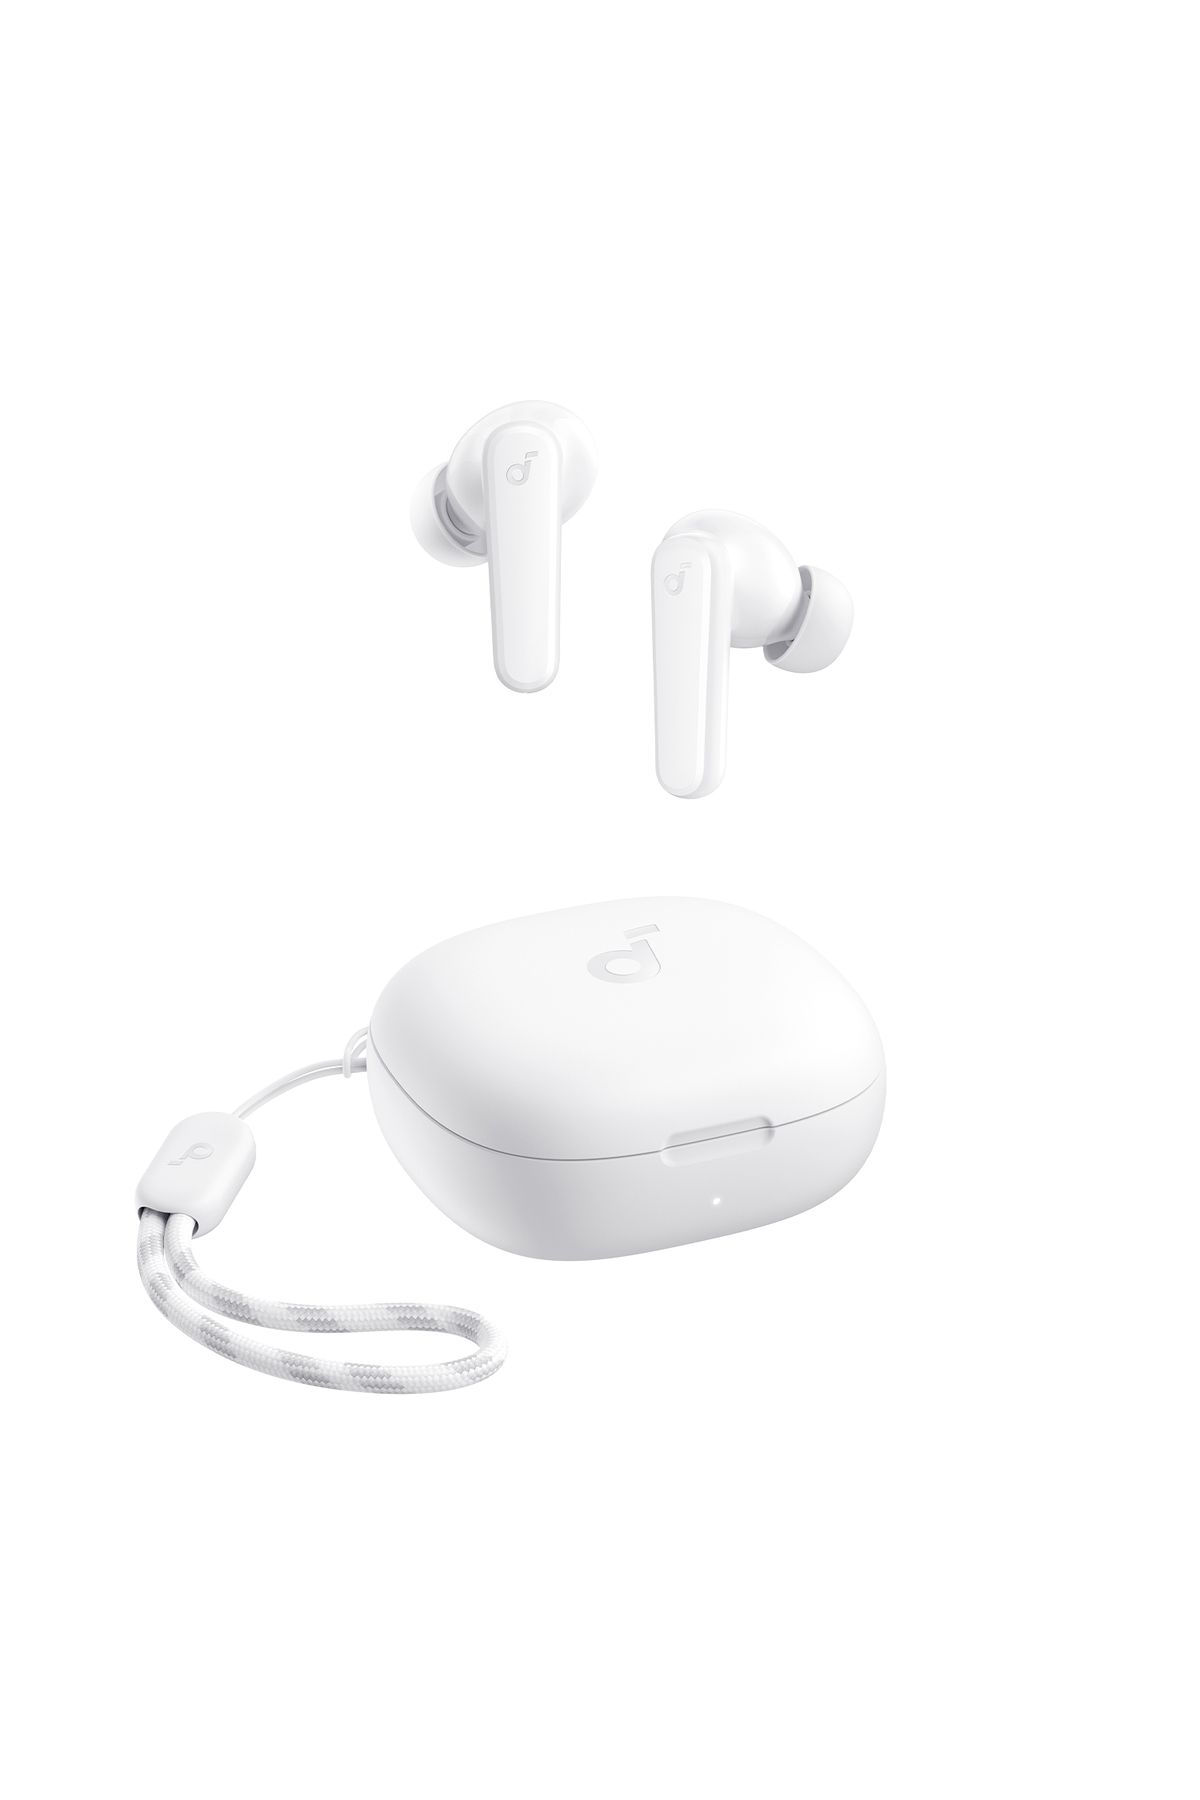 Anker Soundcore Life P20i Tws Kablosuz Bluetooth Kulaklık - Beyaz